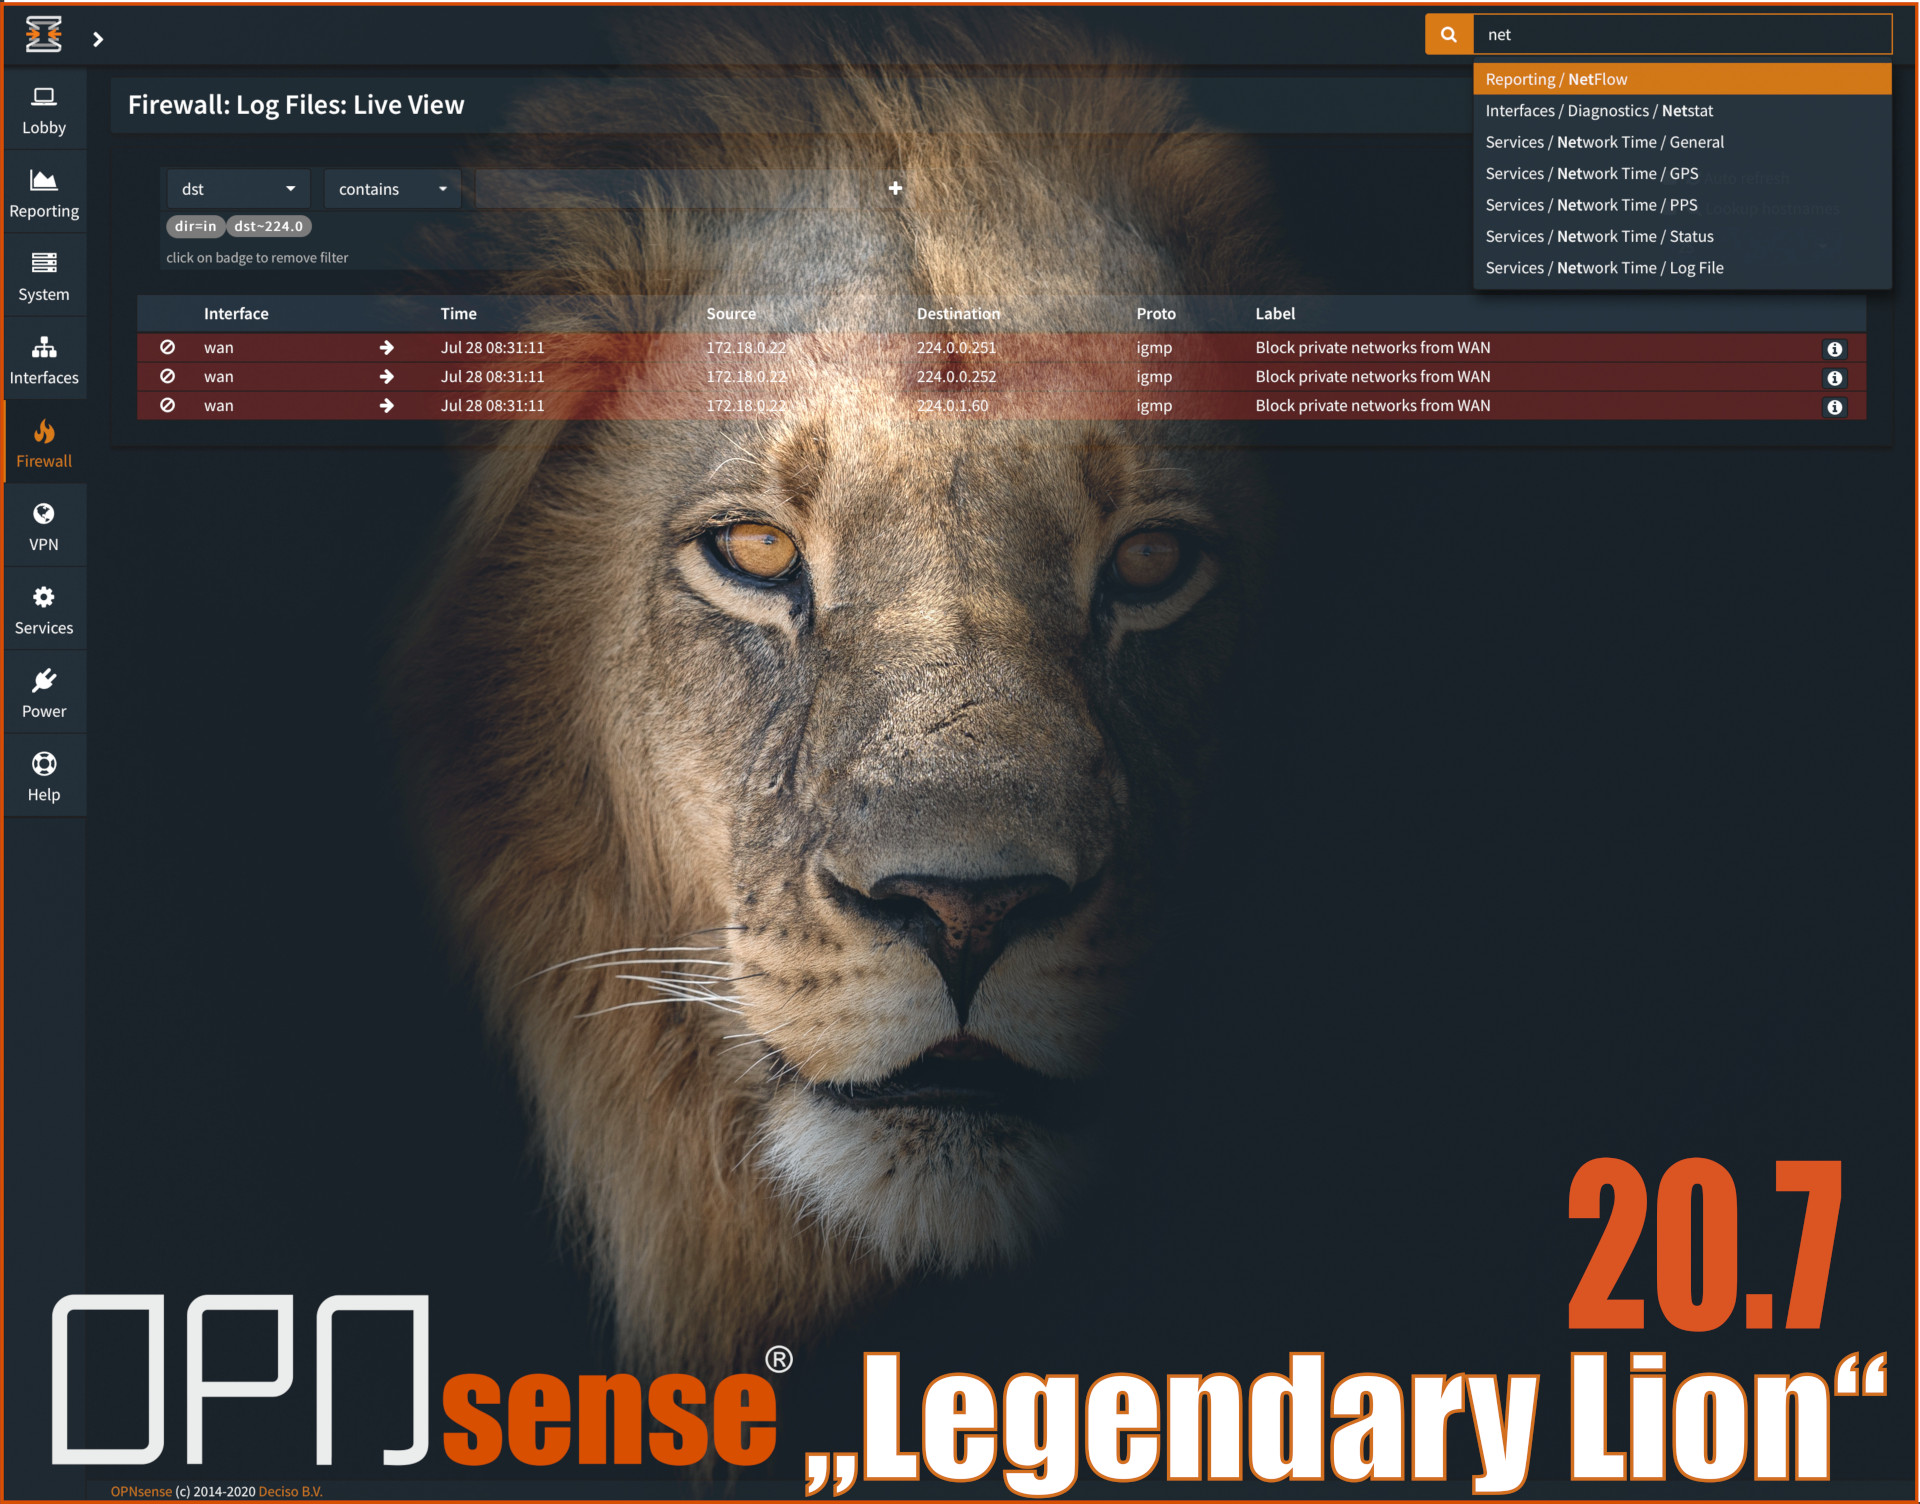 OPNsense® “Legendary Lion” introduces major OS upgrade